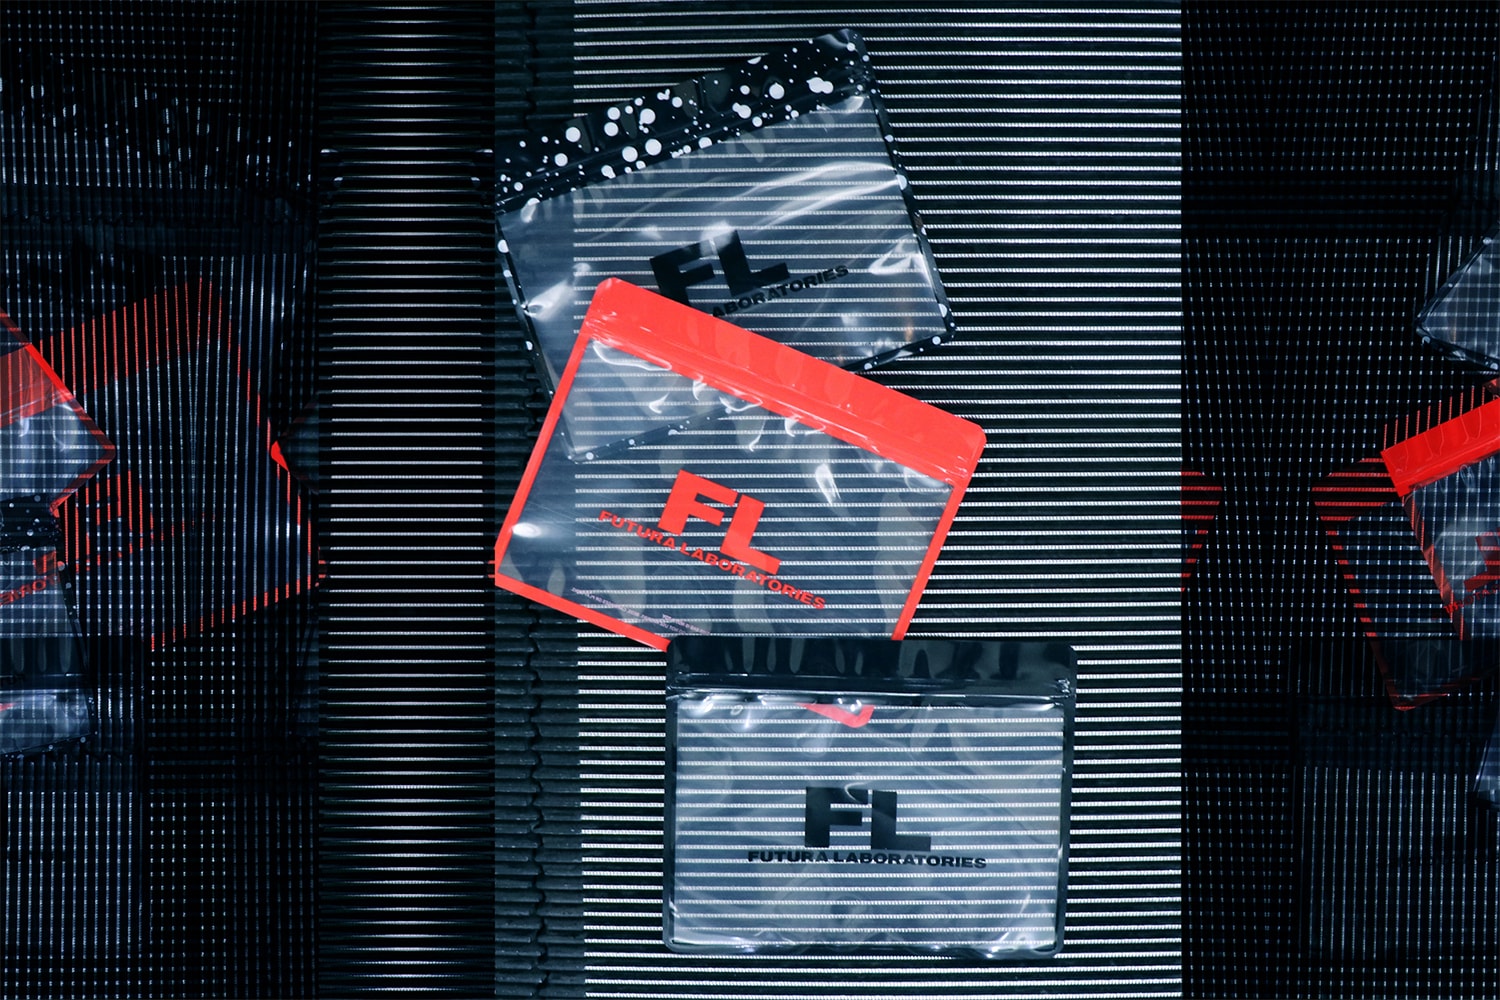 Futura Laboratories Pake Release Info Japanese Zip Bag Red Black Drops graffiti Isetan Shinjuku Harajuku Pop Up